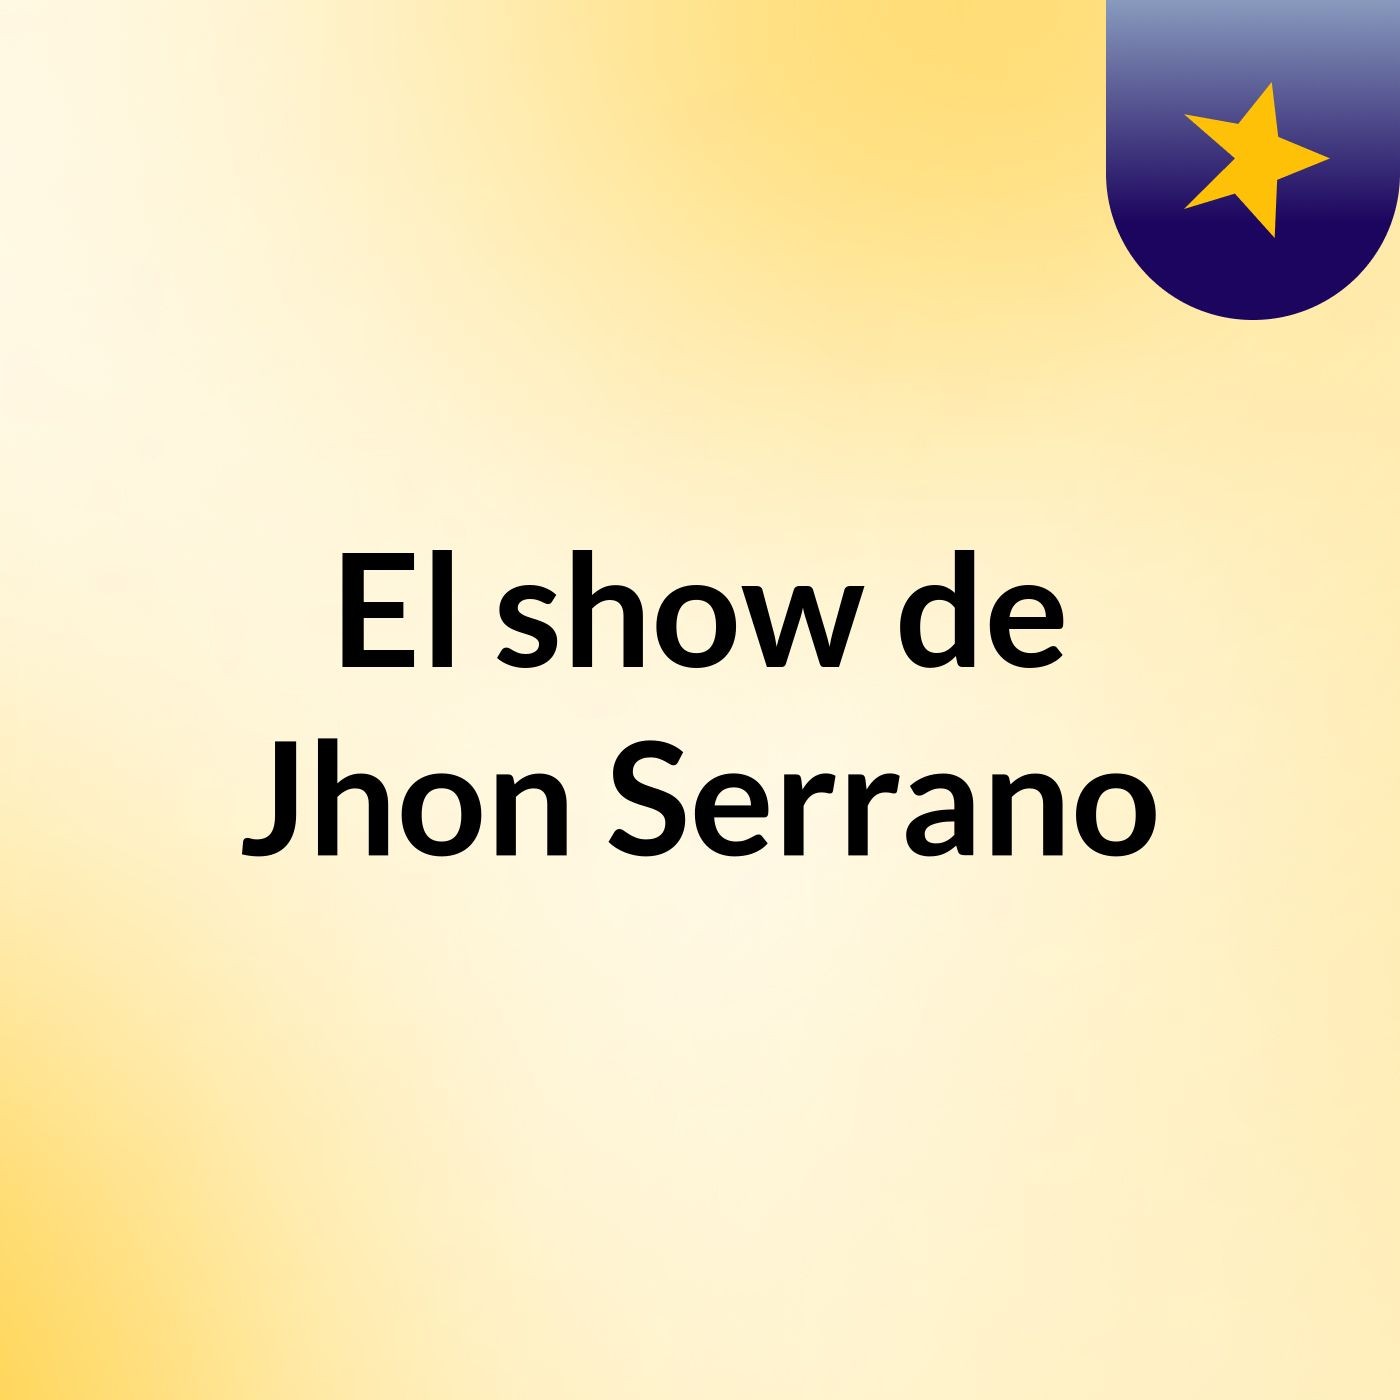 El show de Jhon Serrano